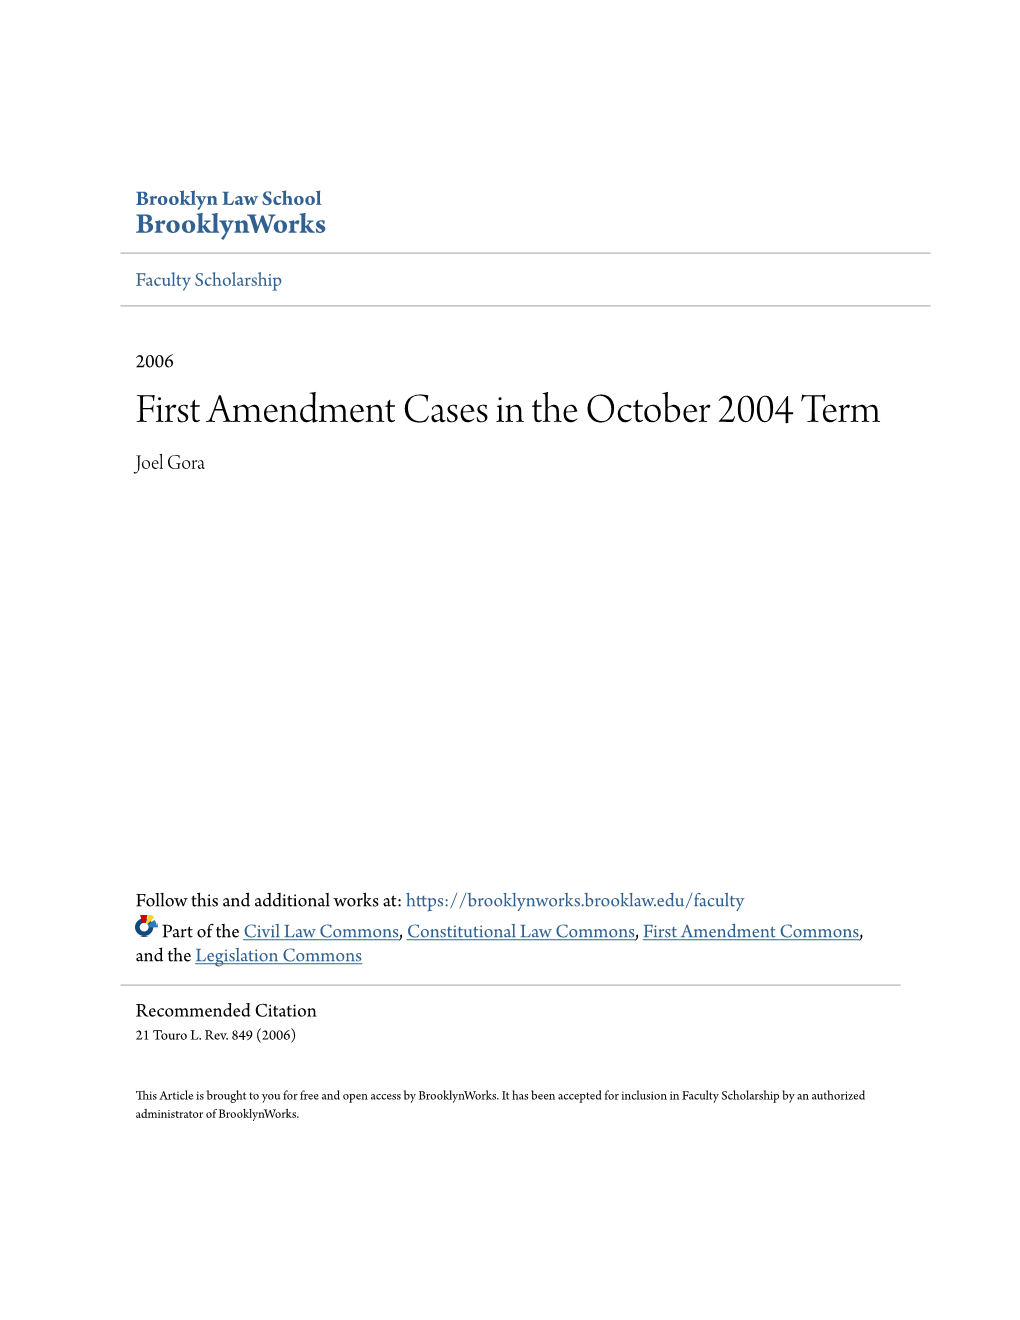 First Amendment Cases in the October 2004 Term Joel Gora